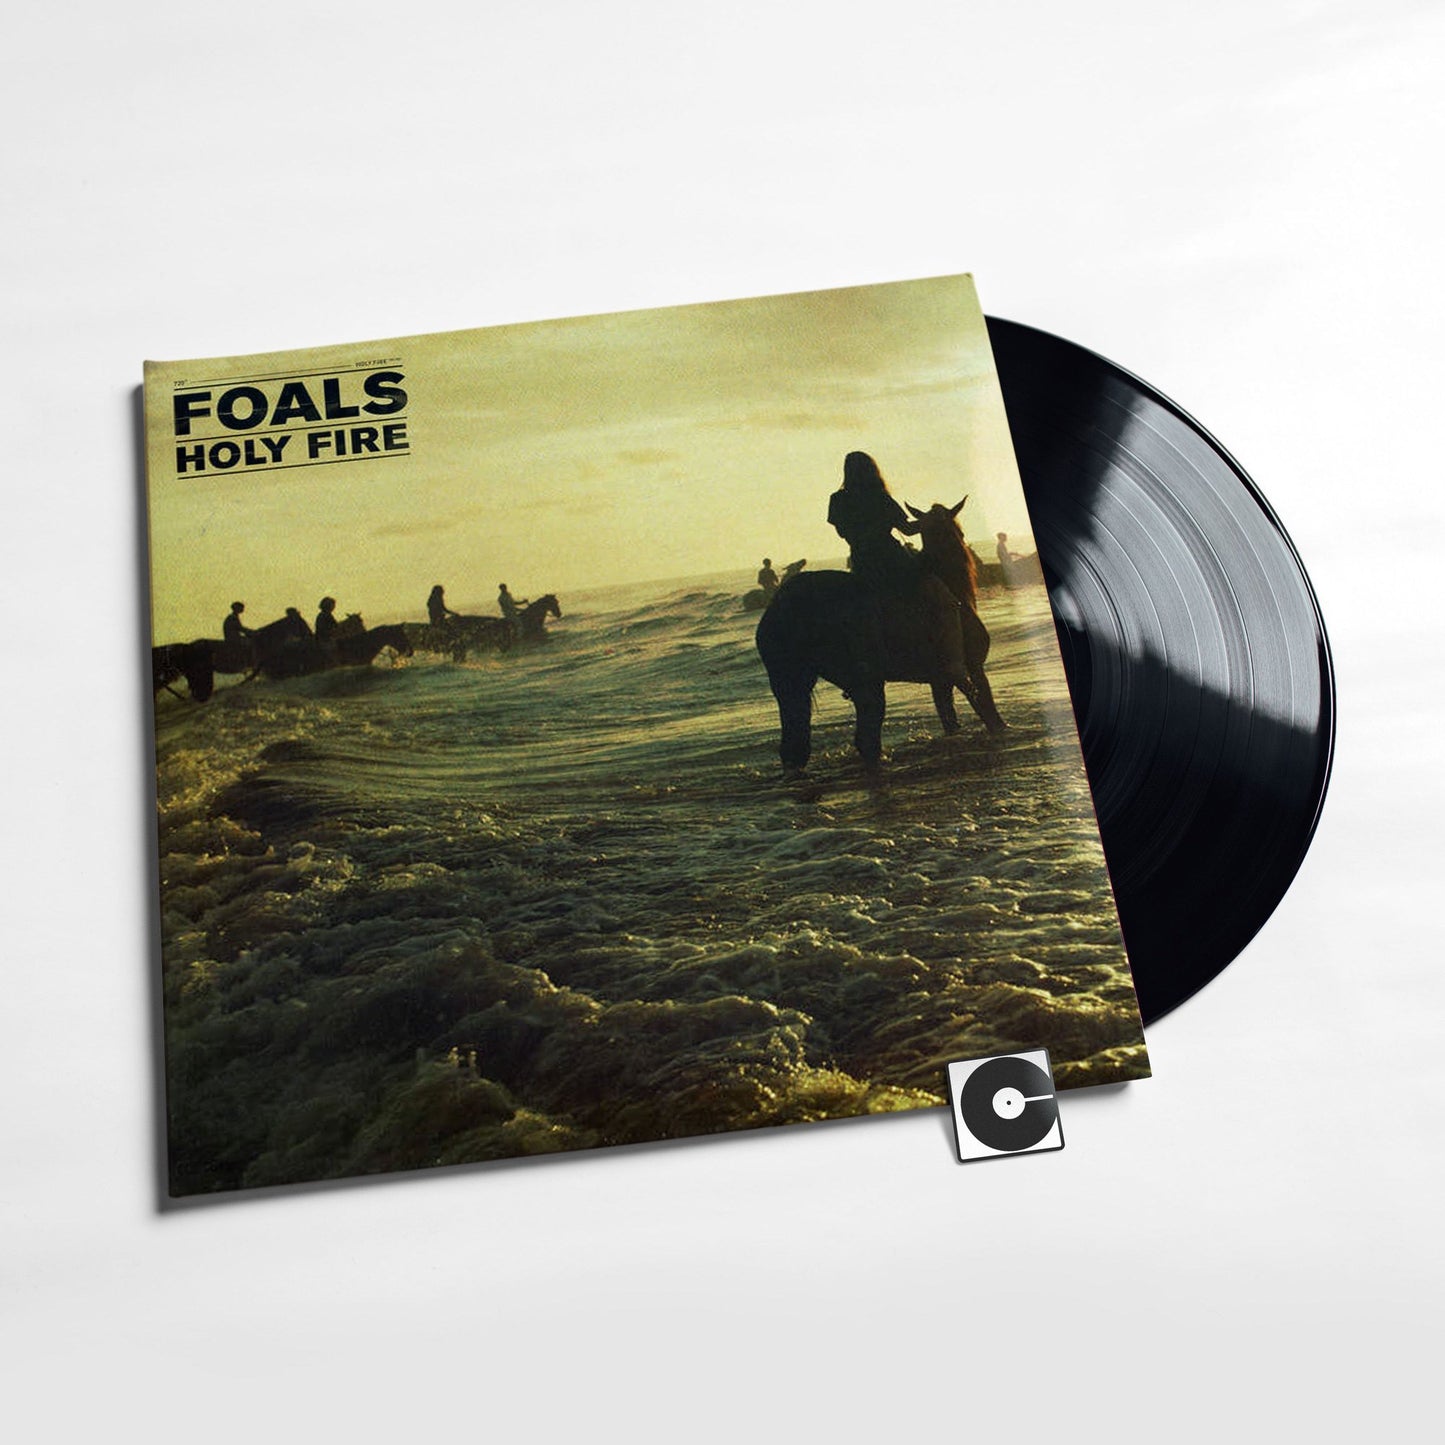 Foals - "Holy Fire"